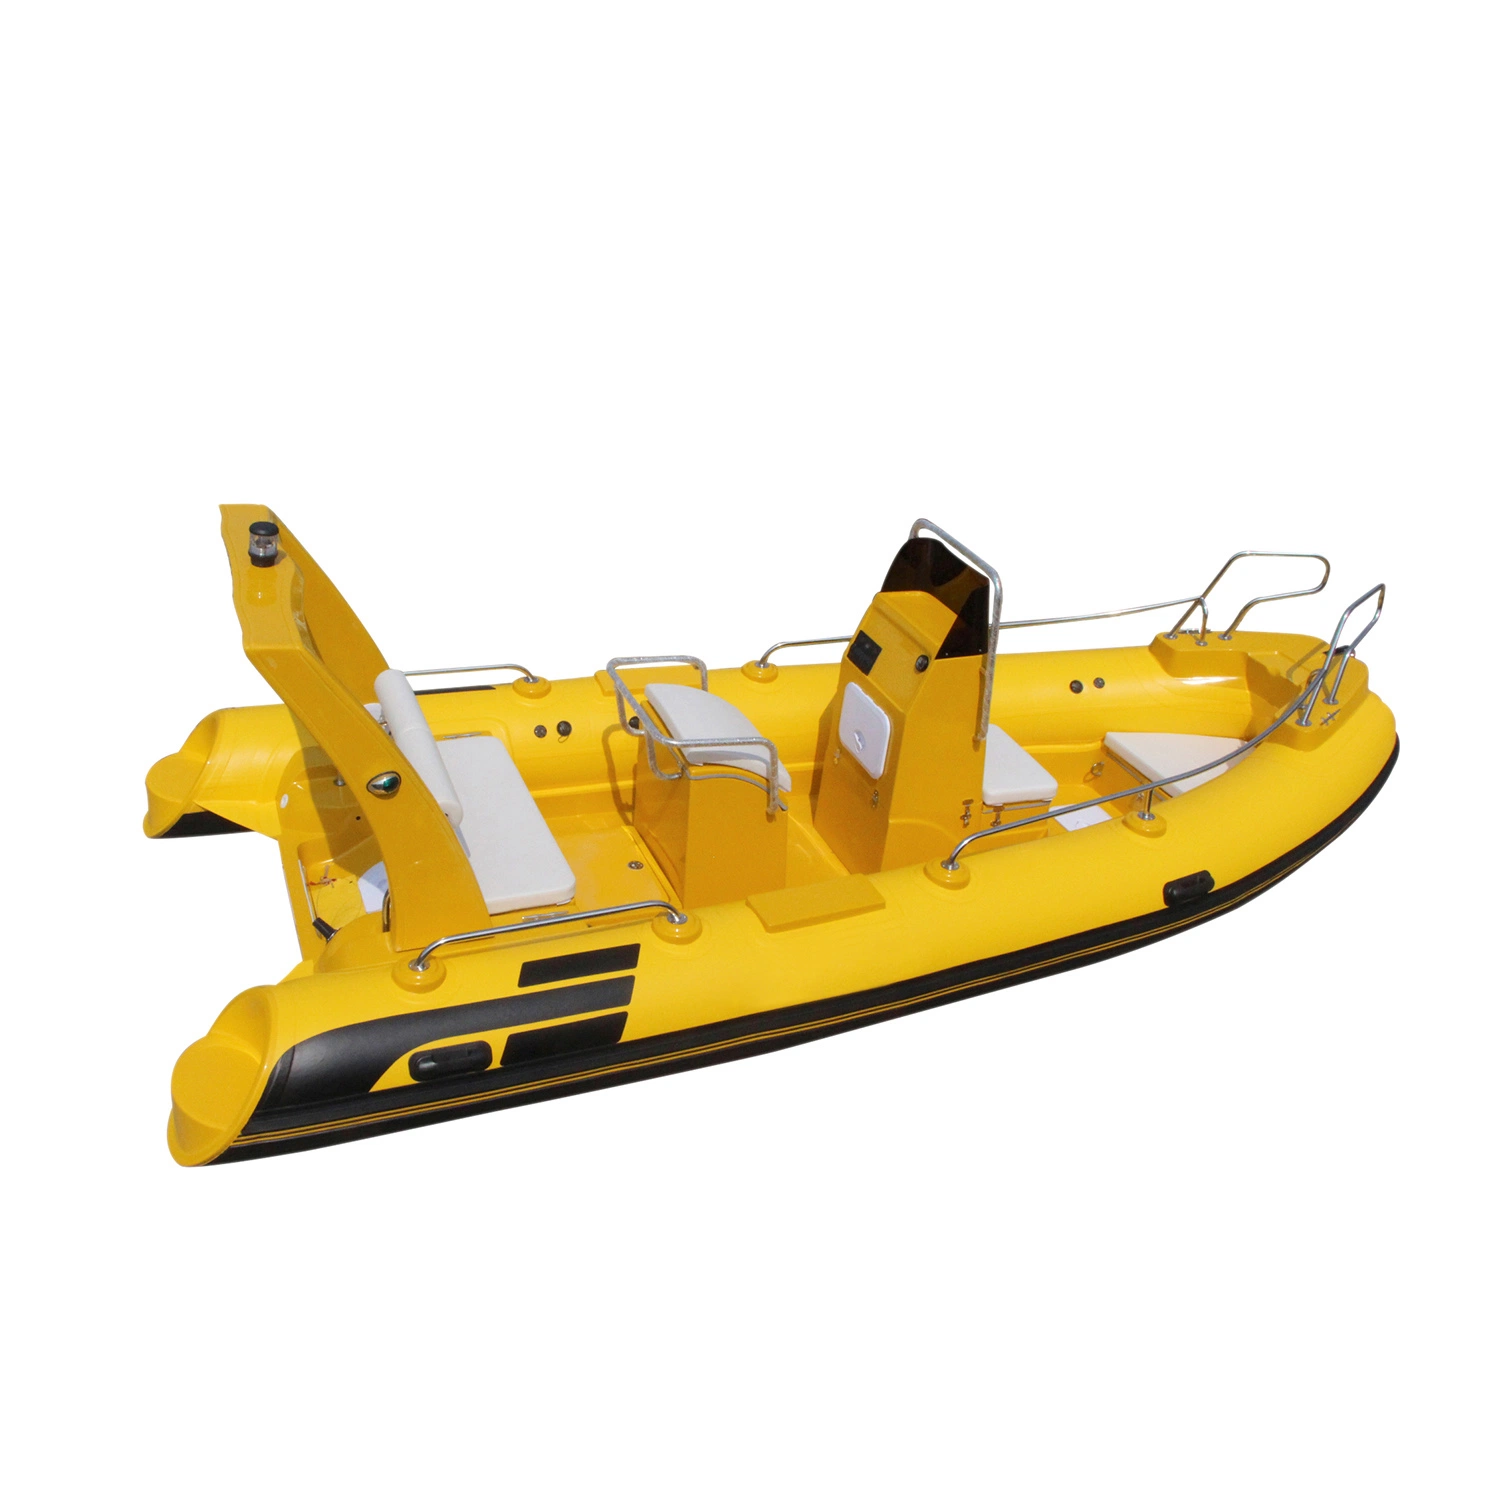 17FT Rib/Inflatable PVC/Motor/Speed/Fishing Boat